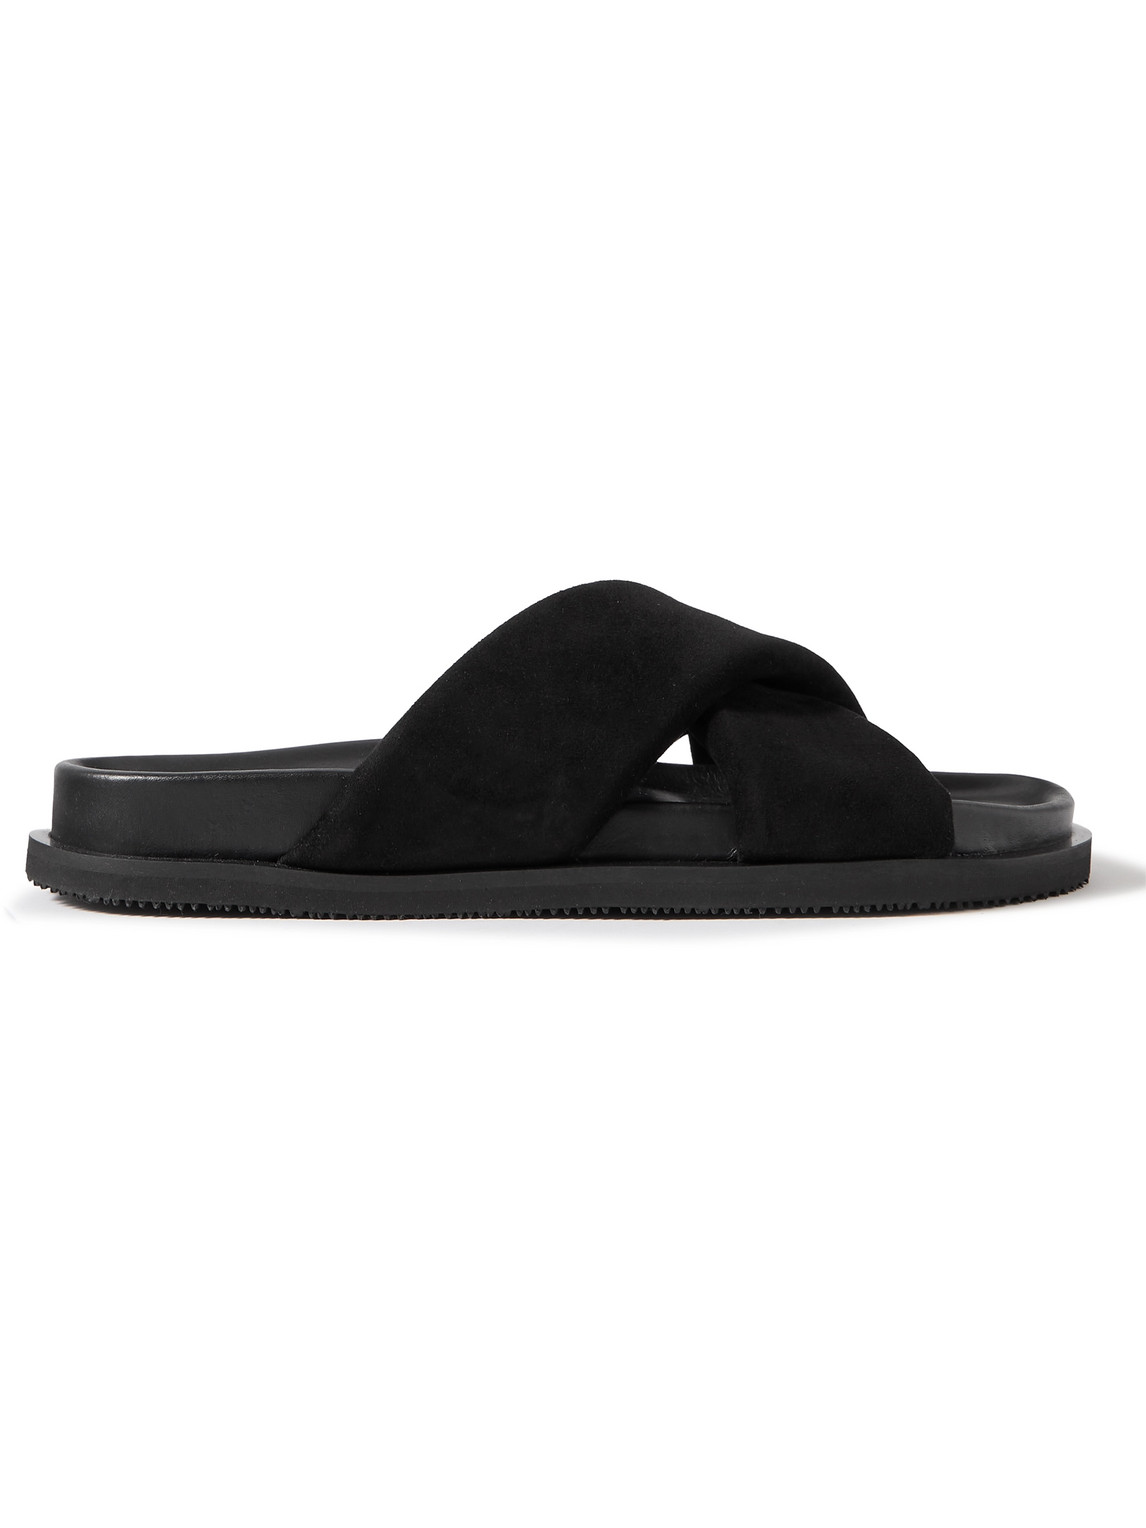 Mr P Tom Padded Suede Sandals In Black